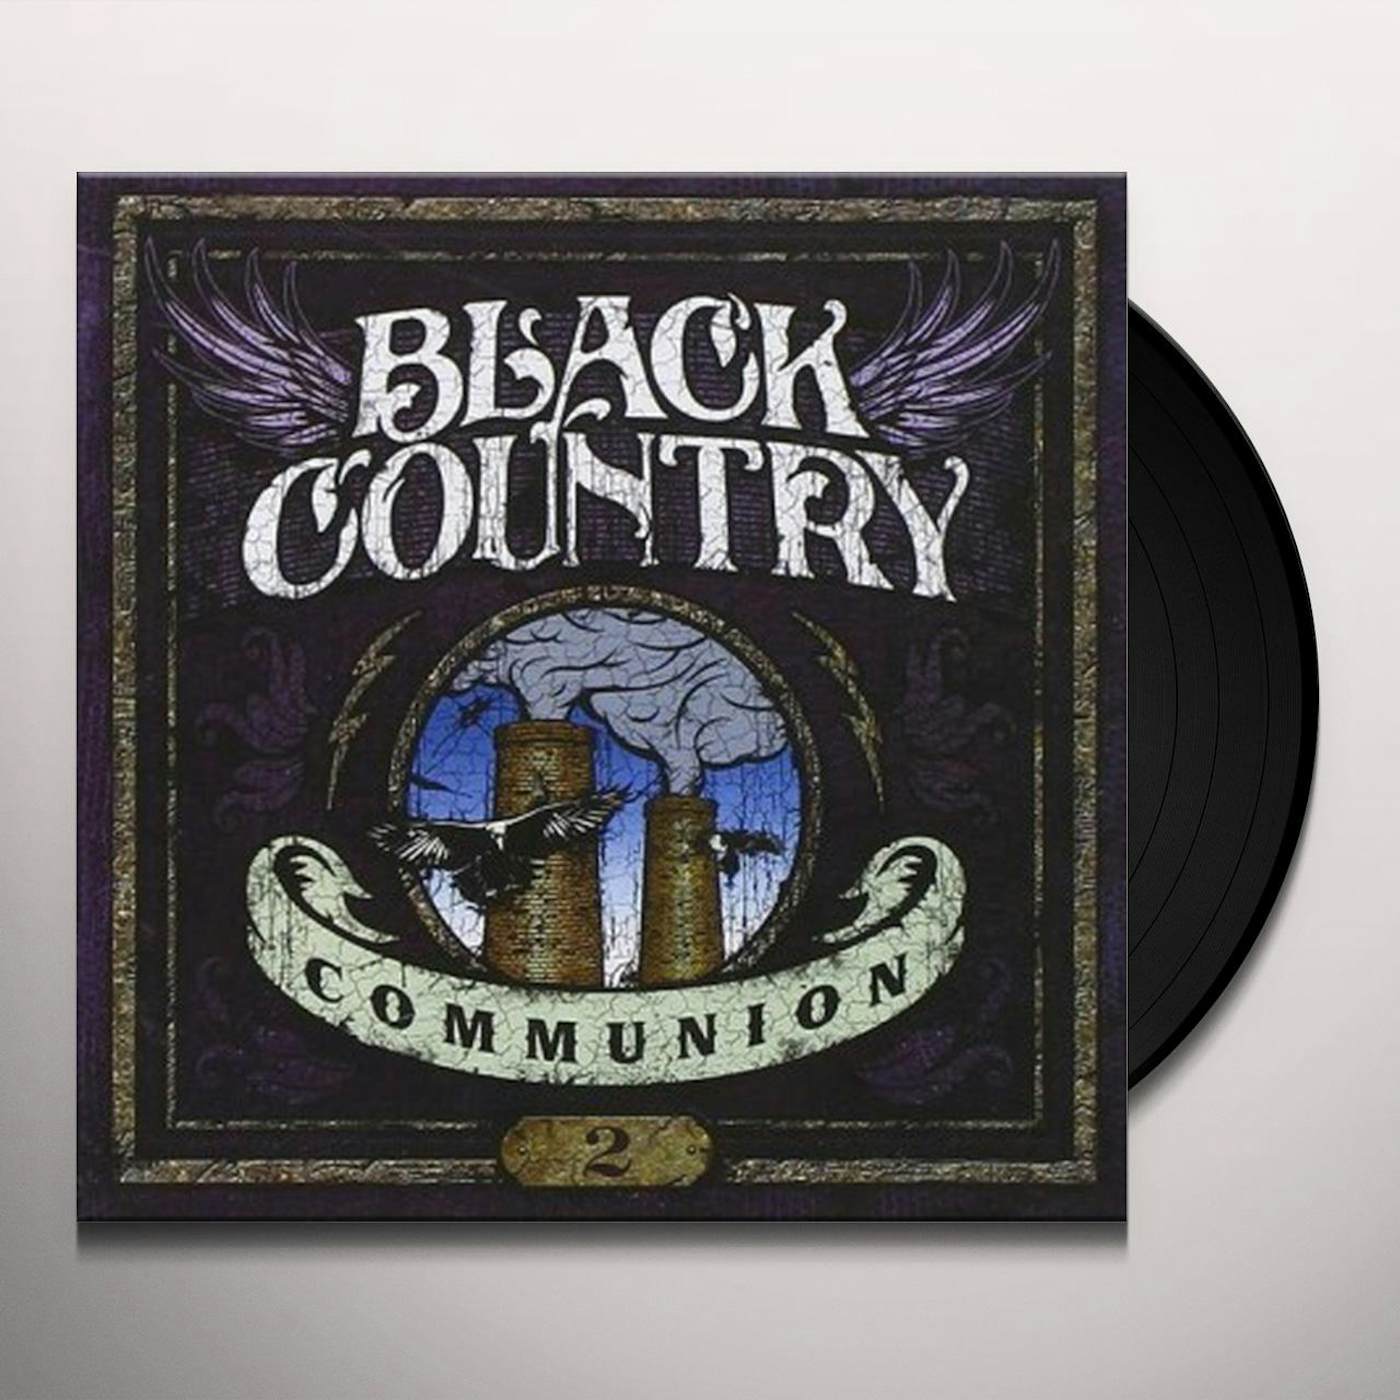 Black Country Communion 2 Vinyl Record